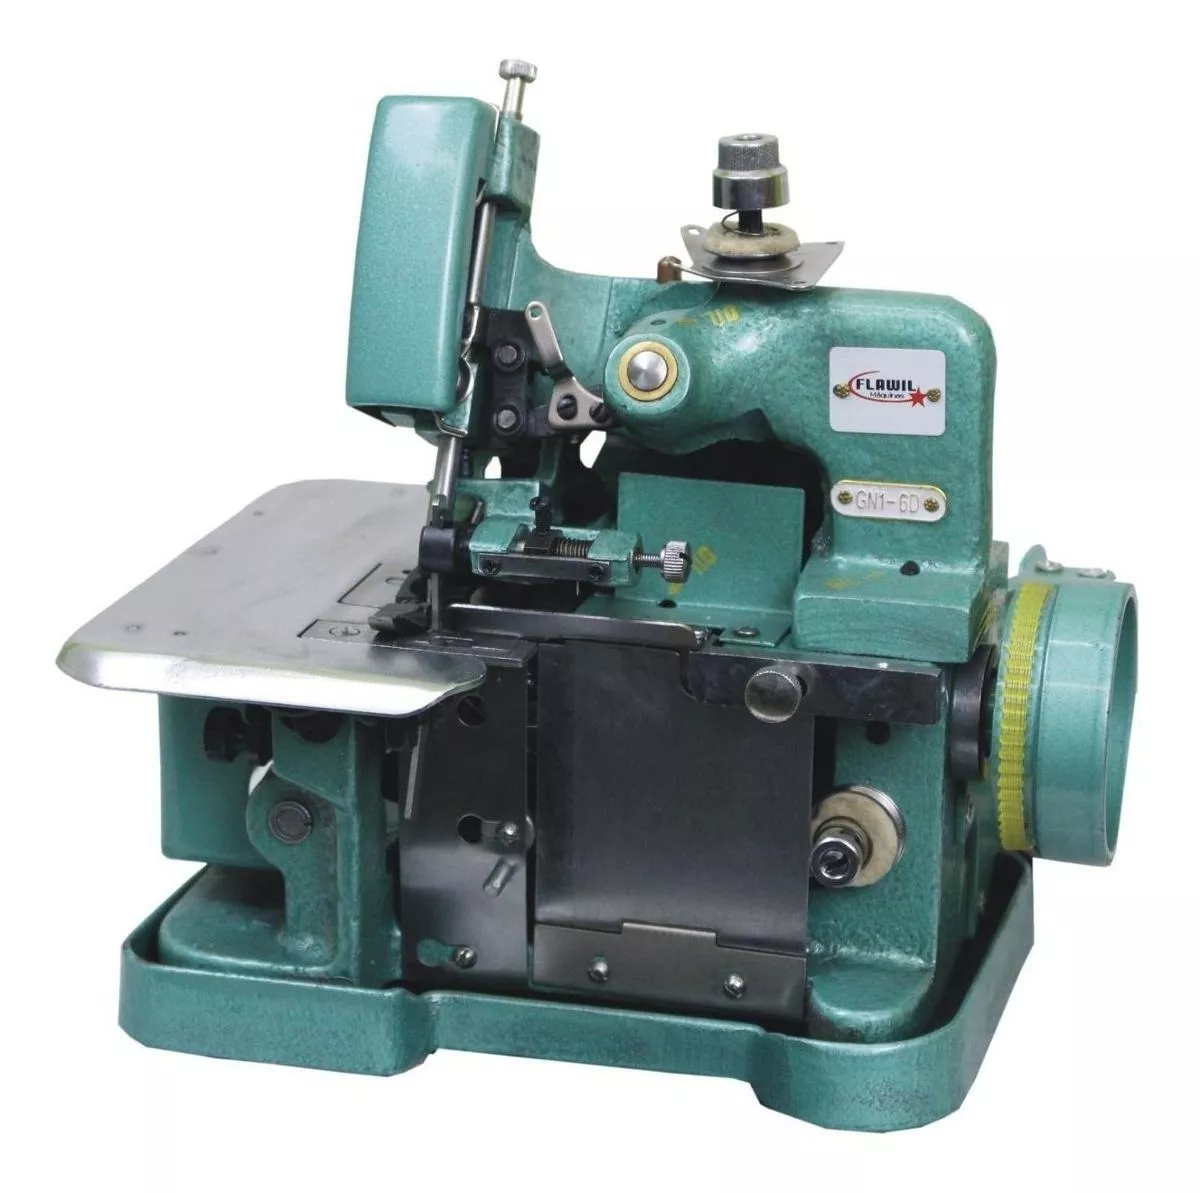 Máquina De Costura Semi Industrial Overlock Flawil Gn1-6d Verde 110v